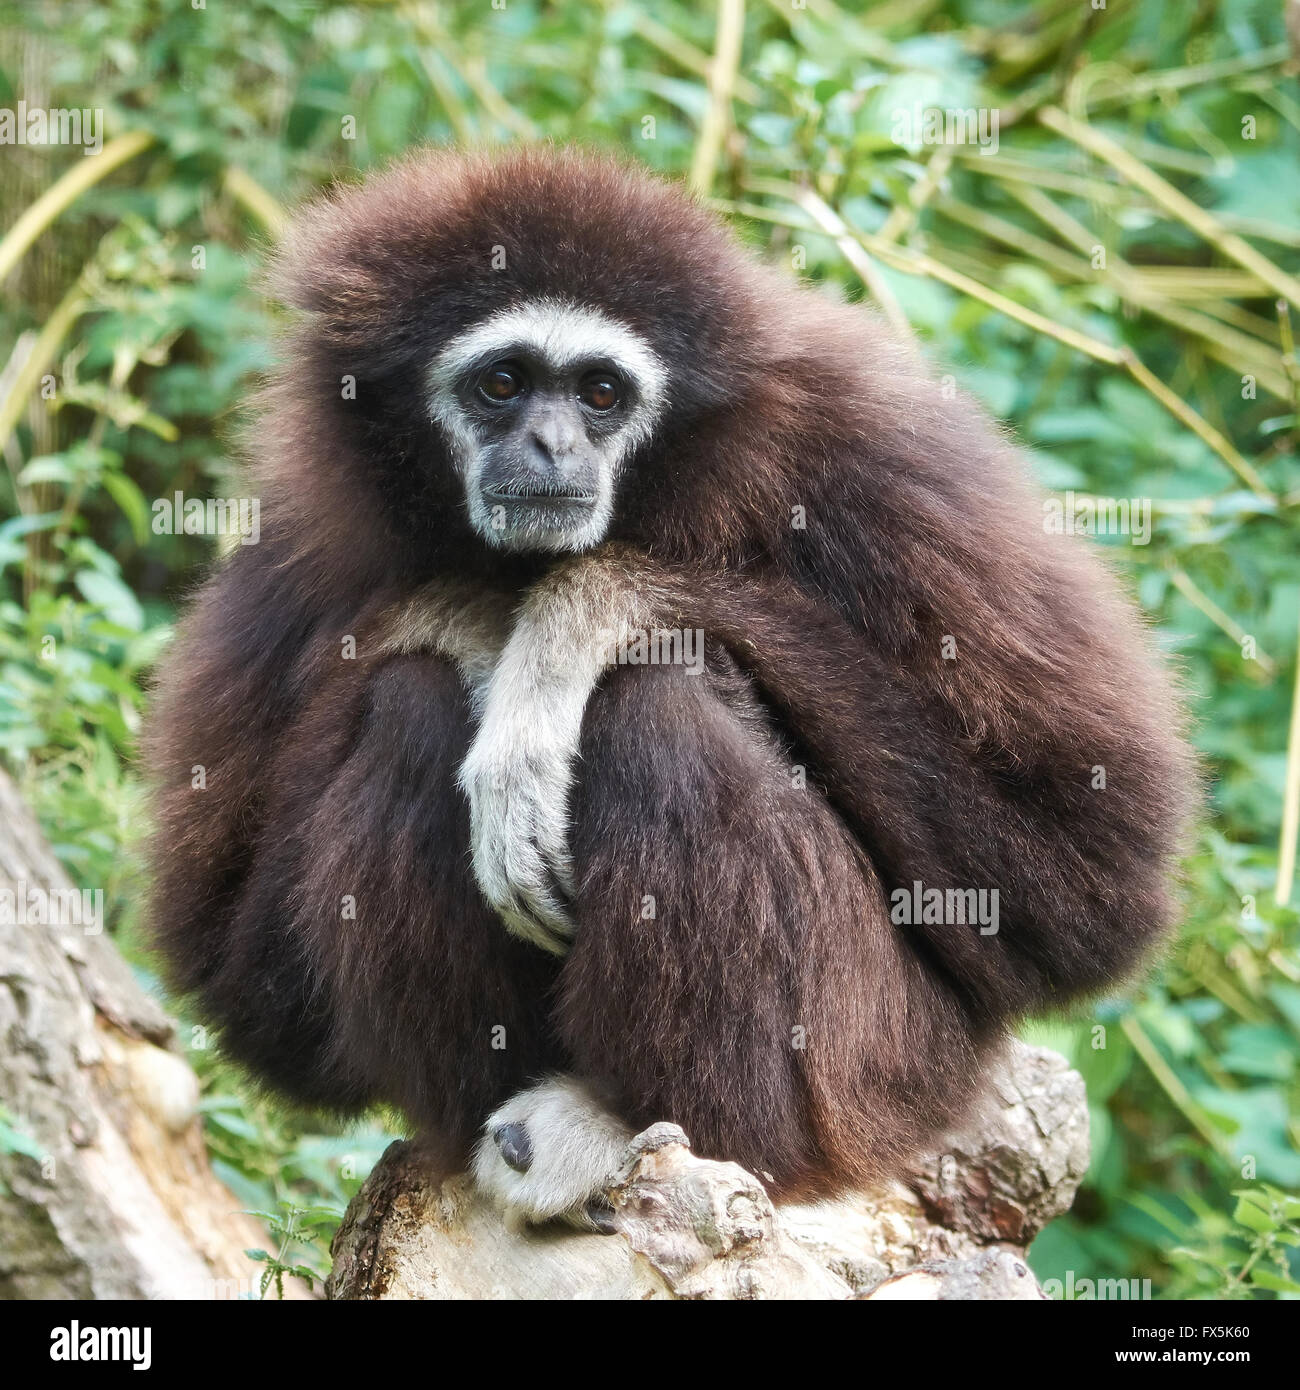 Lar gibbon resing in its natural habitat Stock Photo